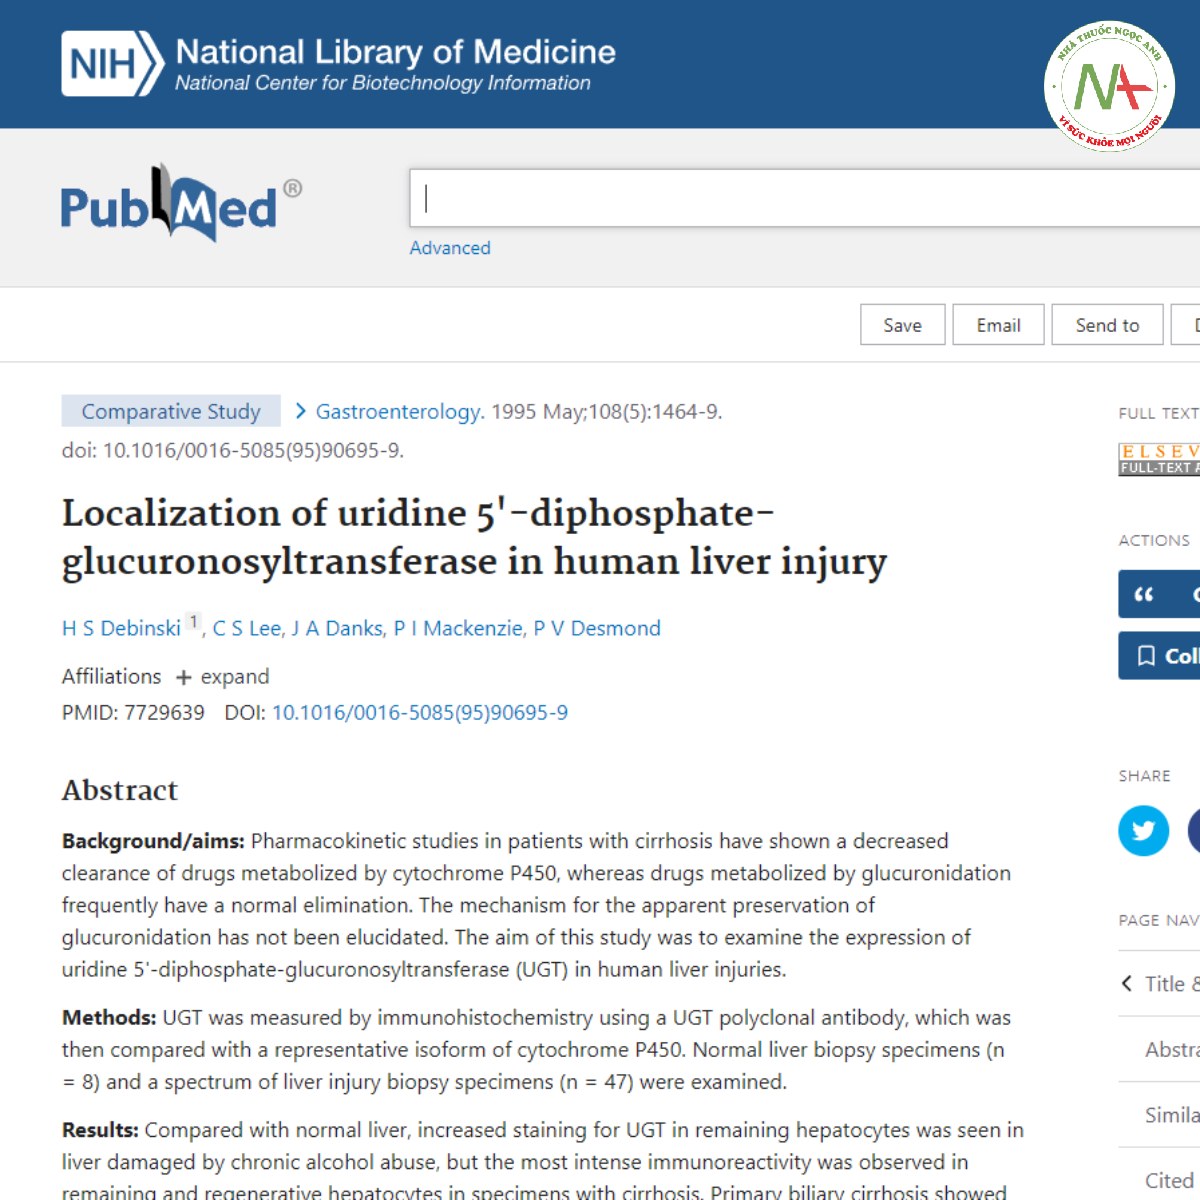 Localization of uridine 5'-diphosphate-glucuronosyltransferase in human liver injury